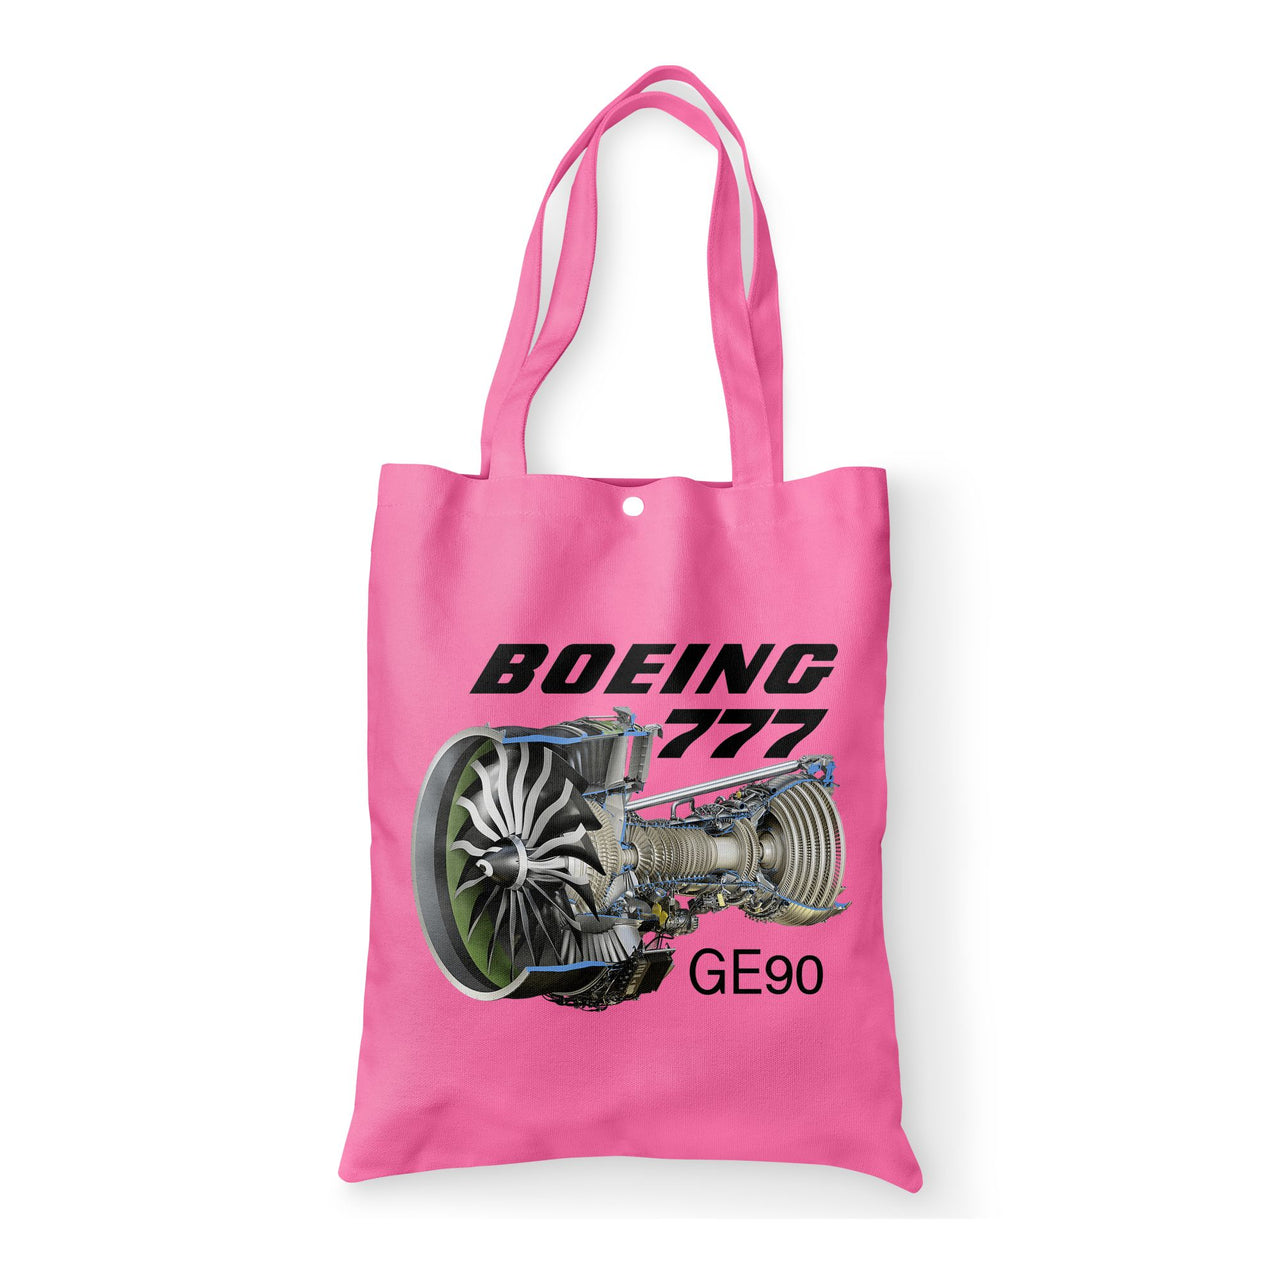 Boeing 777 & GE90 Engine Designed Tote Bags